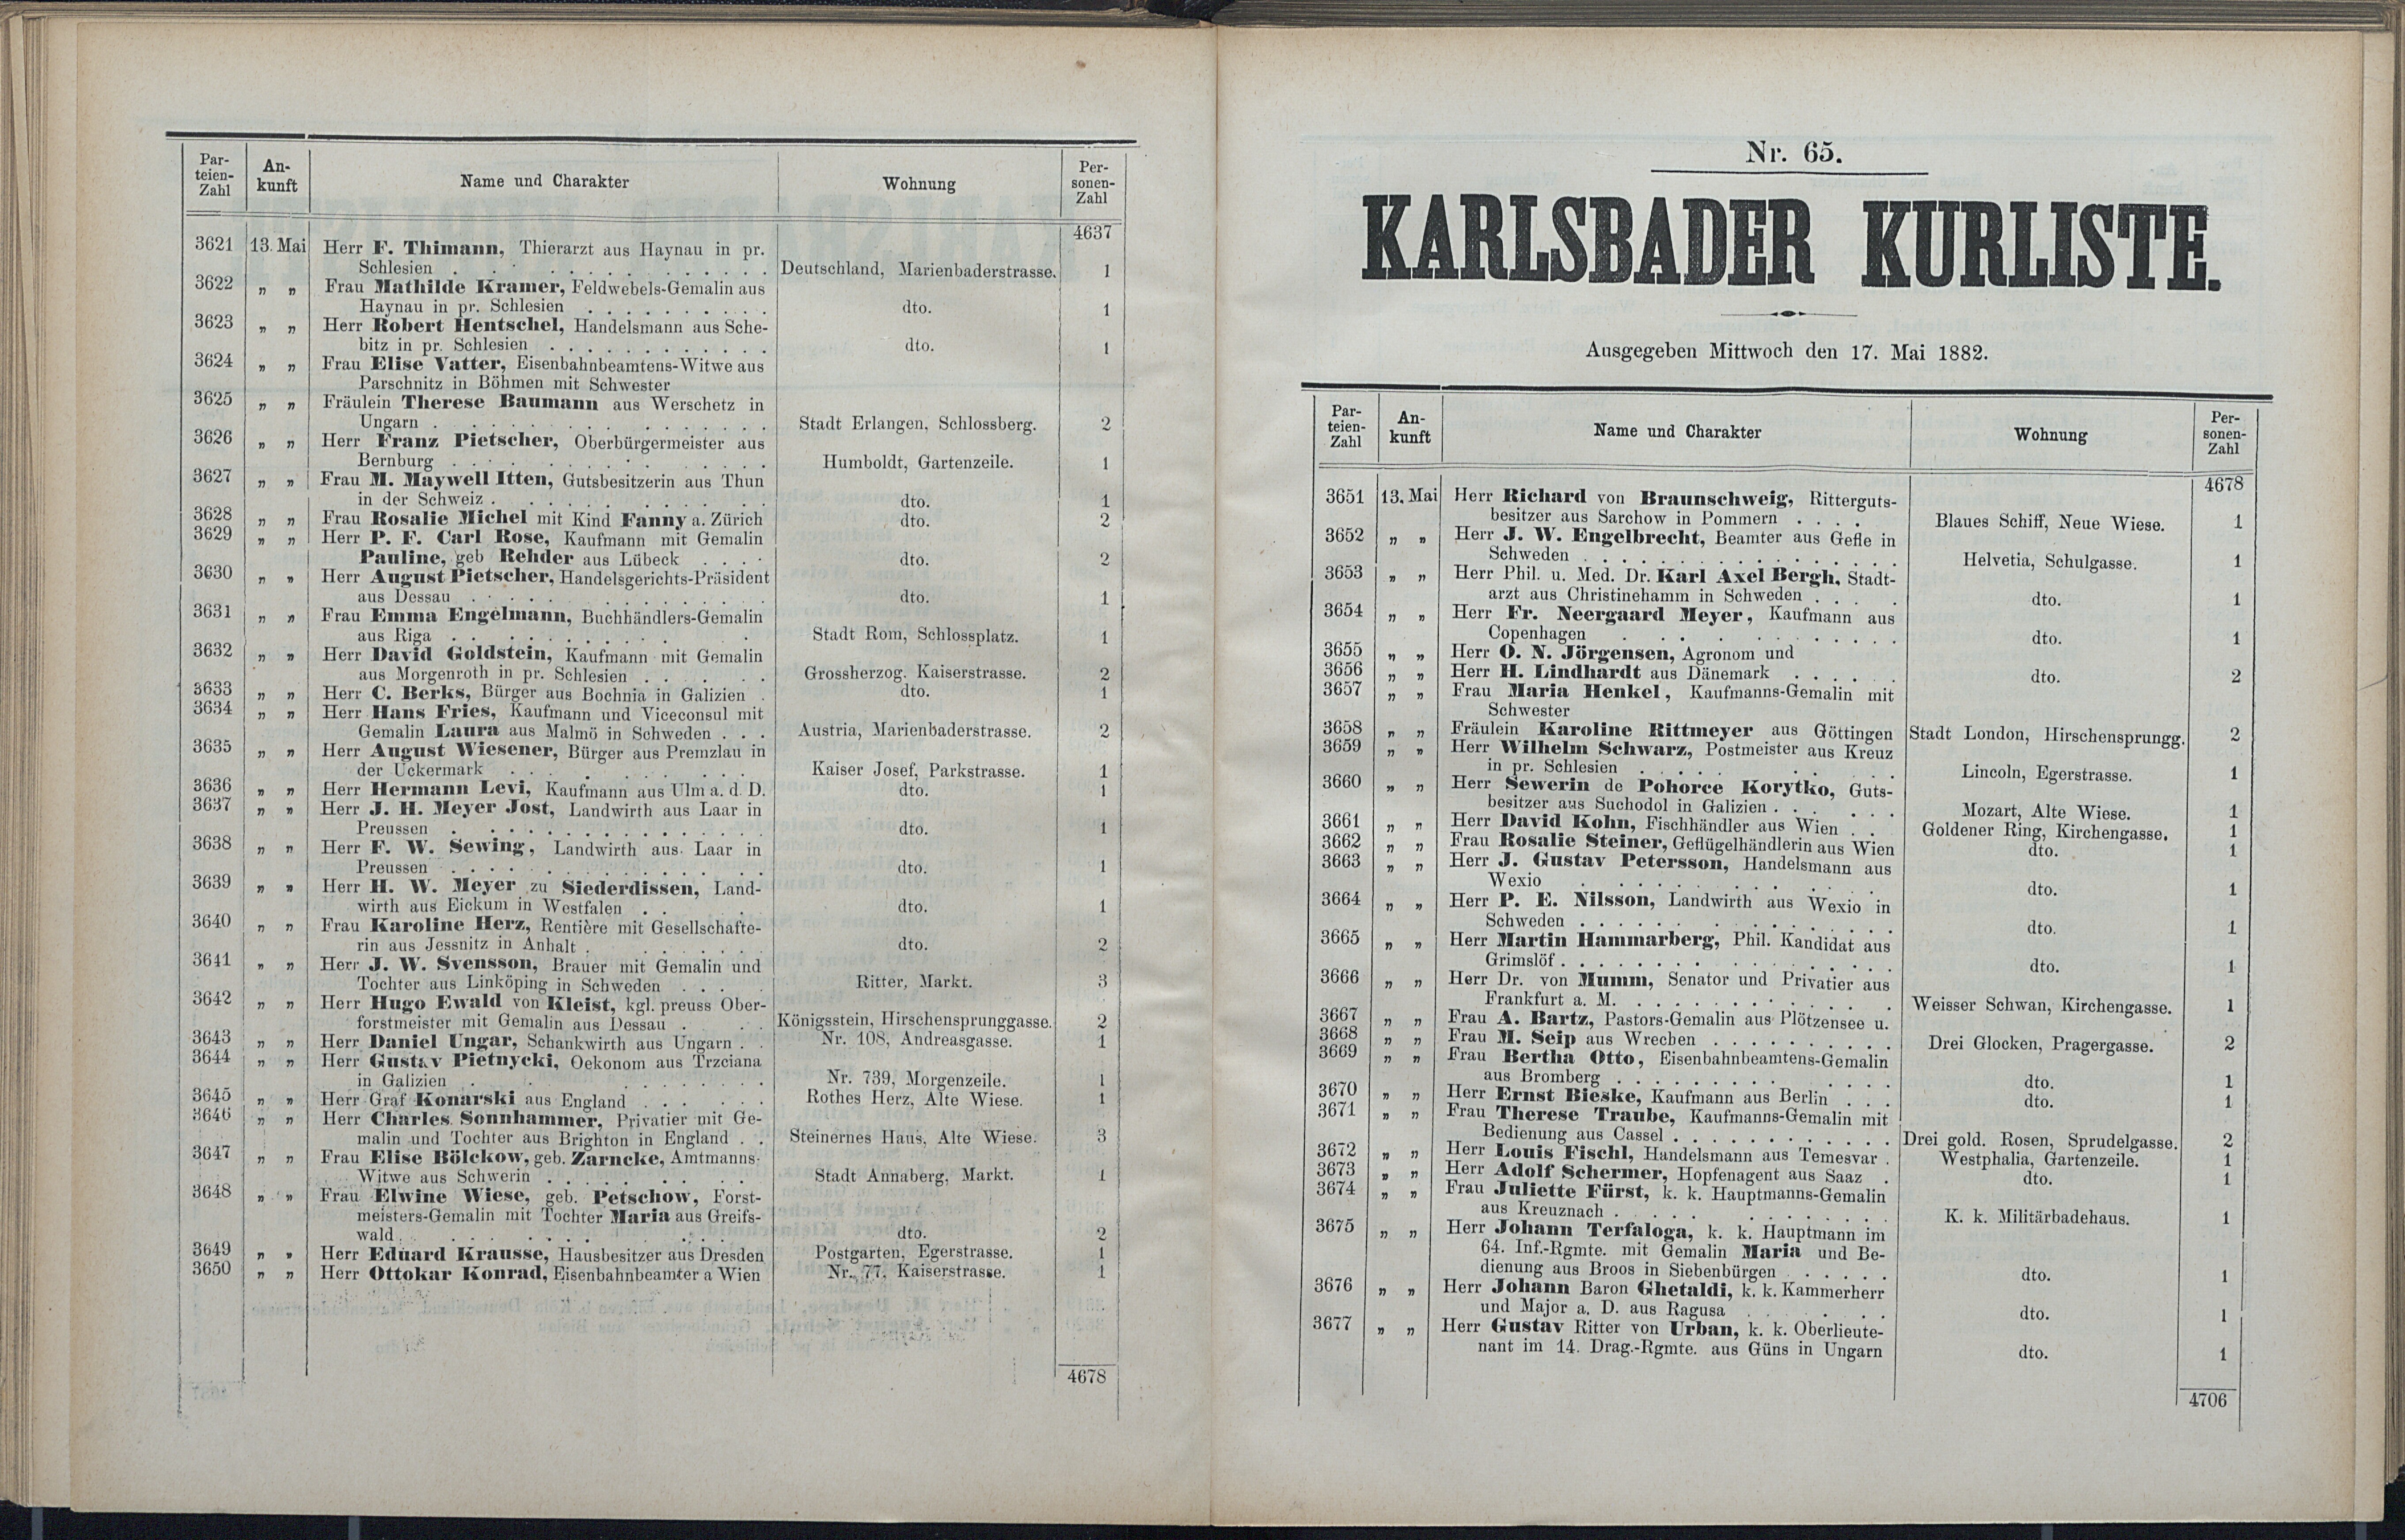 115. soap-kv_knihovna_karlsbader-kurliste-1882_1160